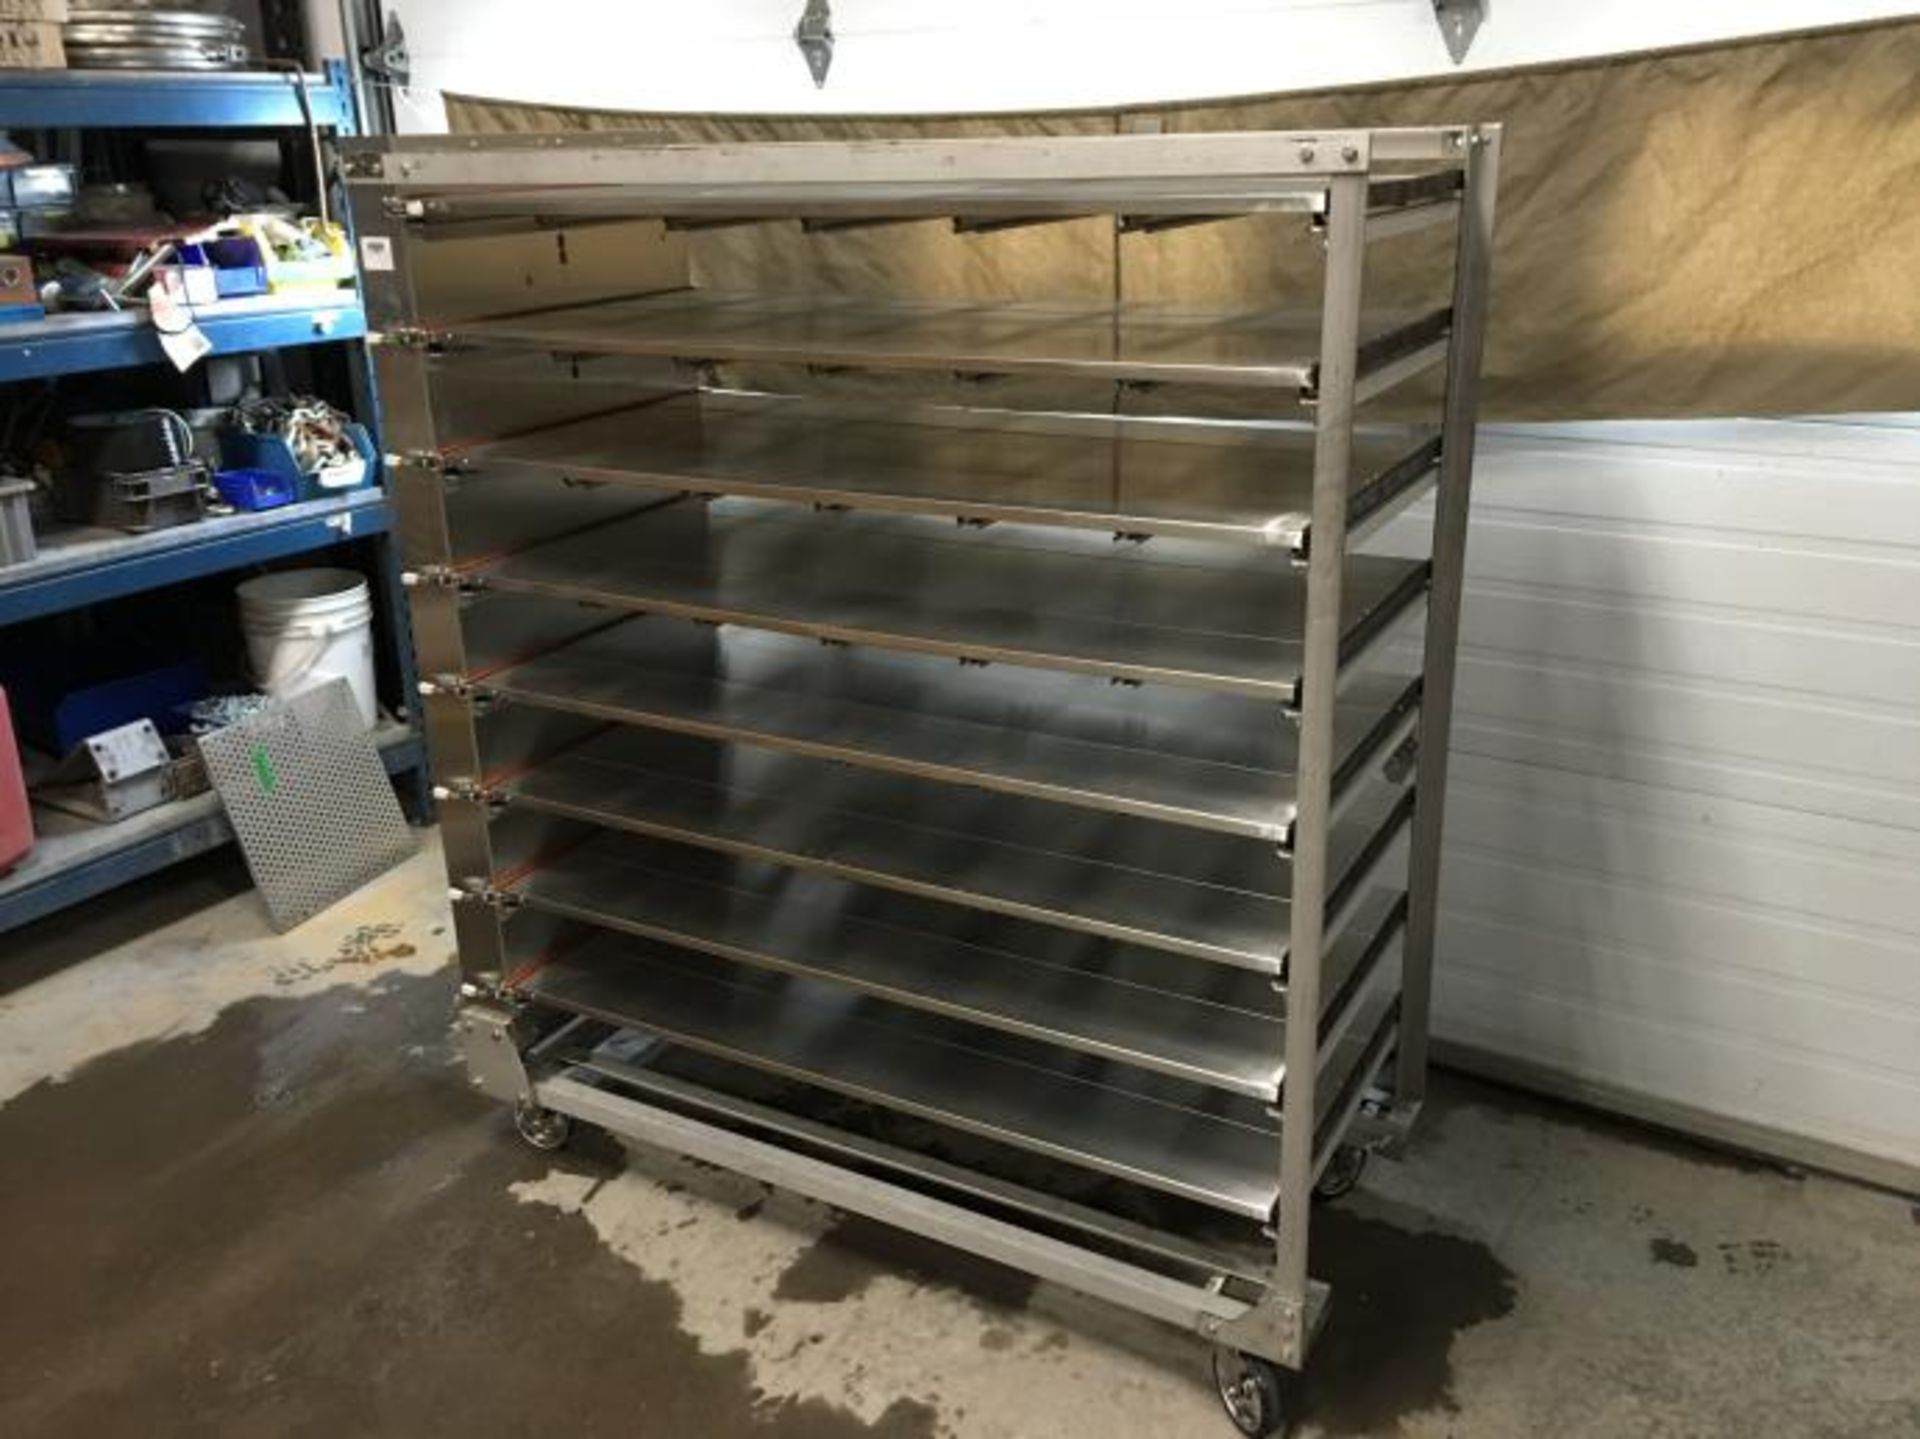 Chariot /étagères en acier inoxydable - Trolley / shelves in stainless steel